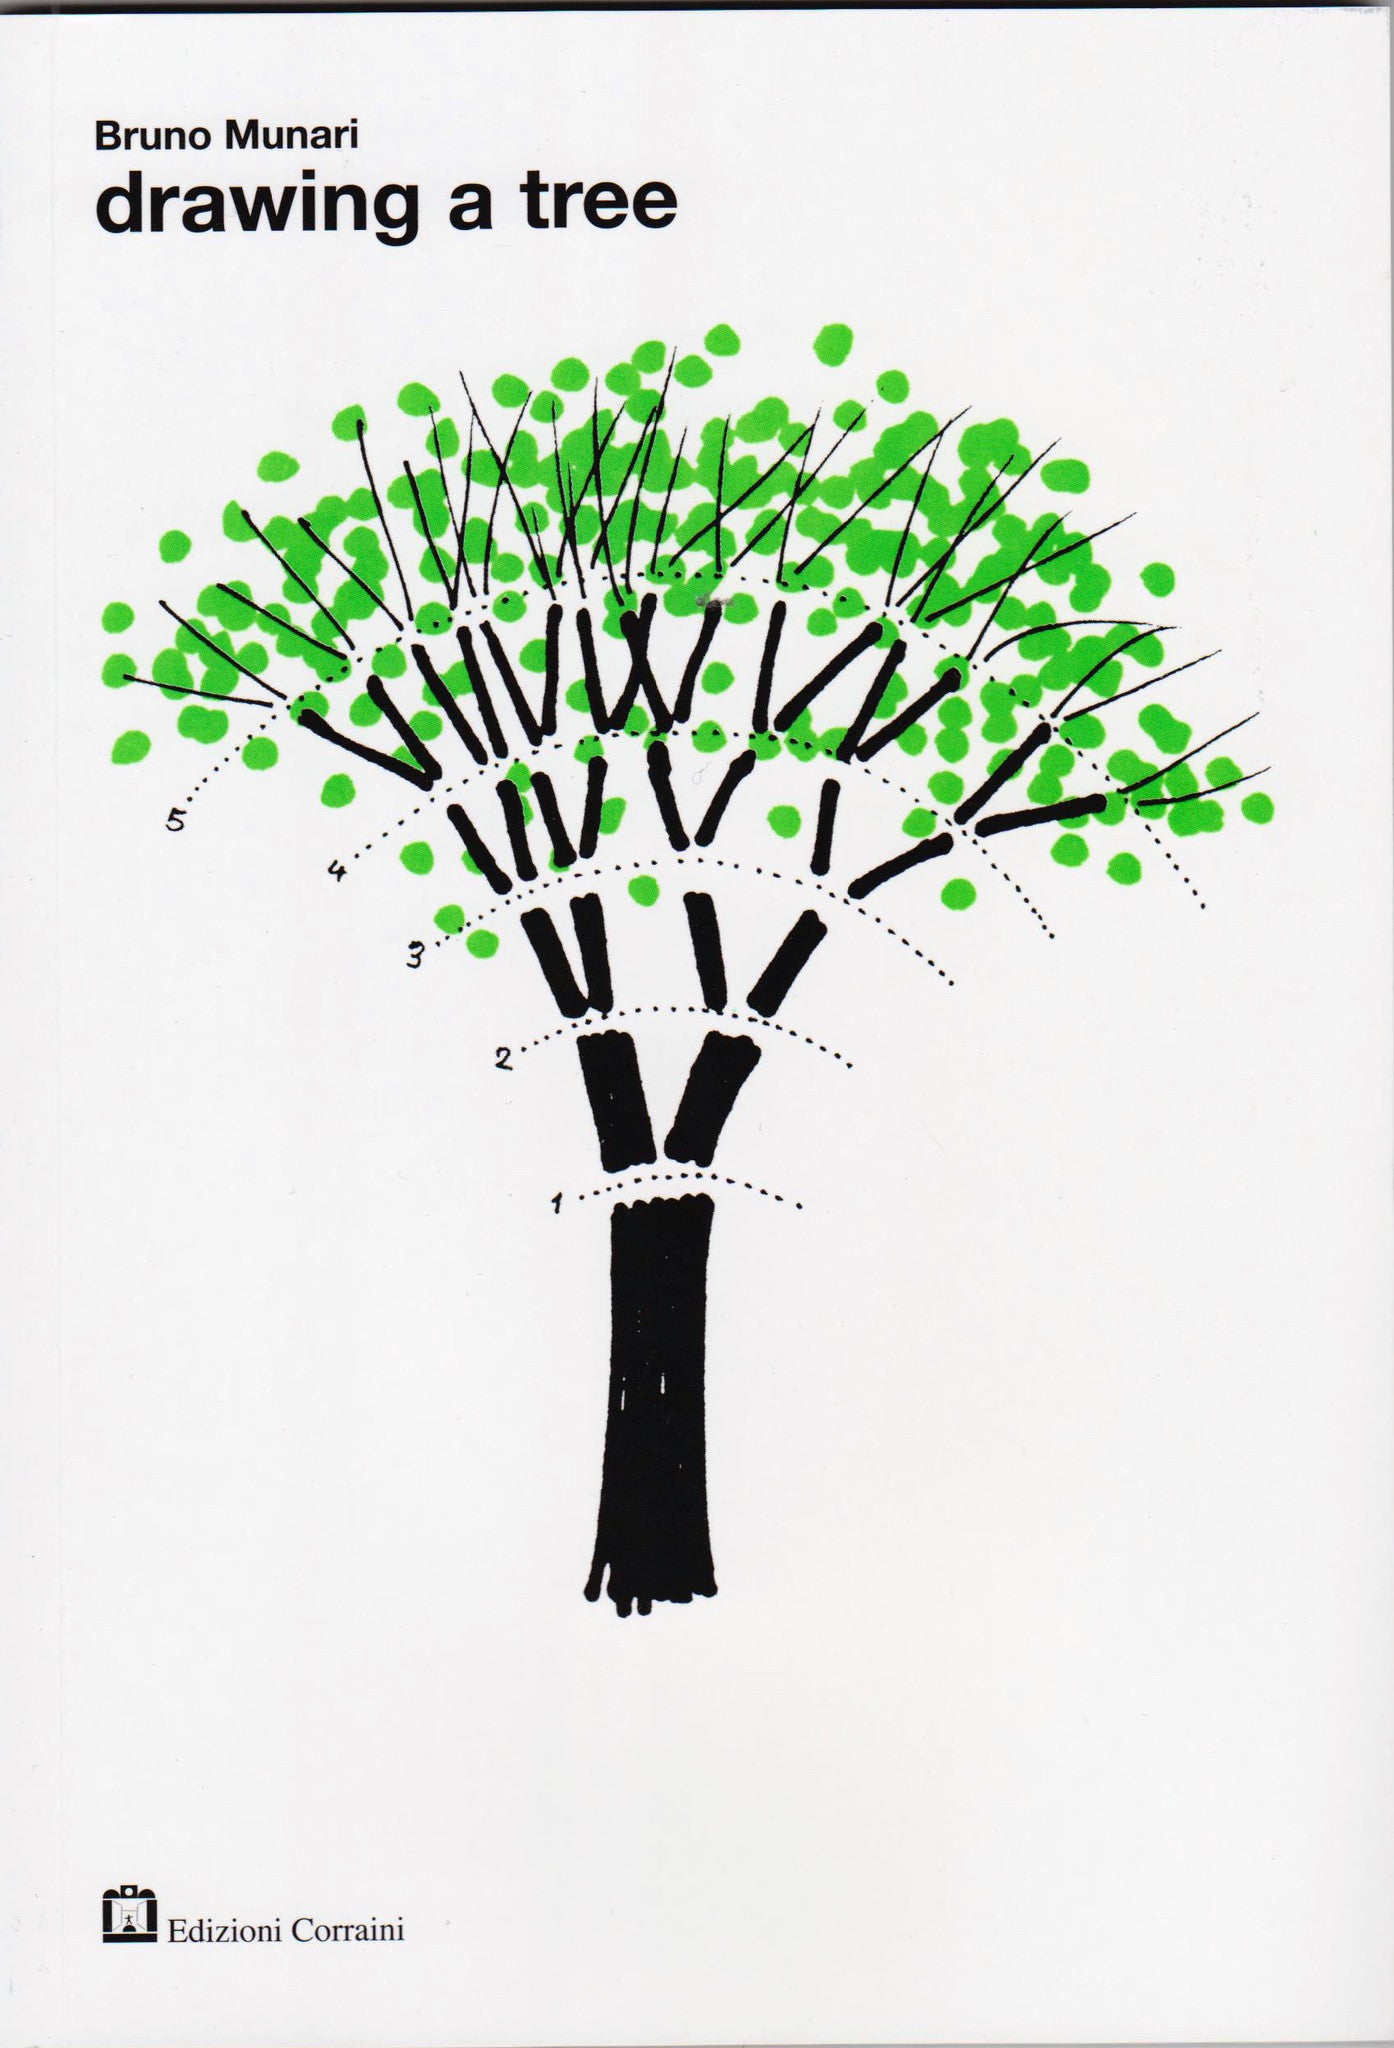 Bruno Munari: Drawing A Tree – ooga booga